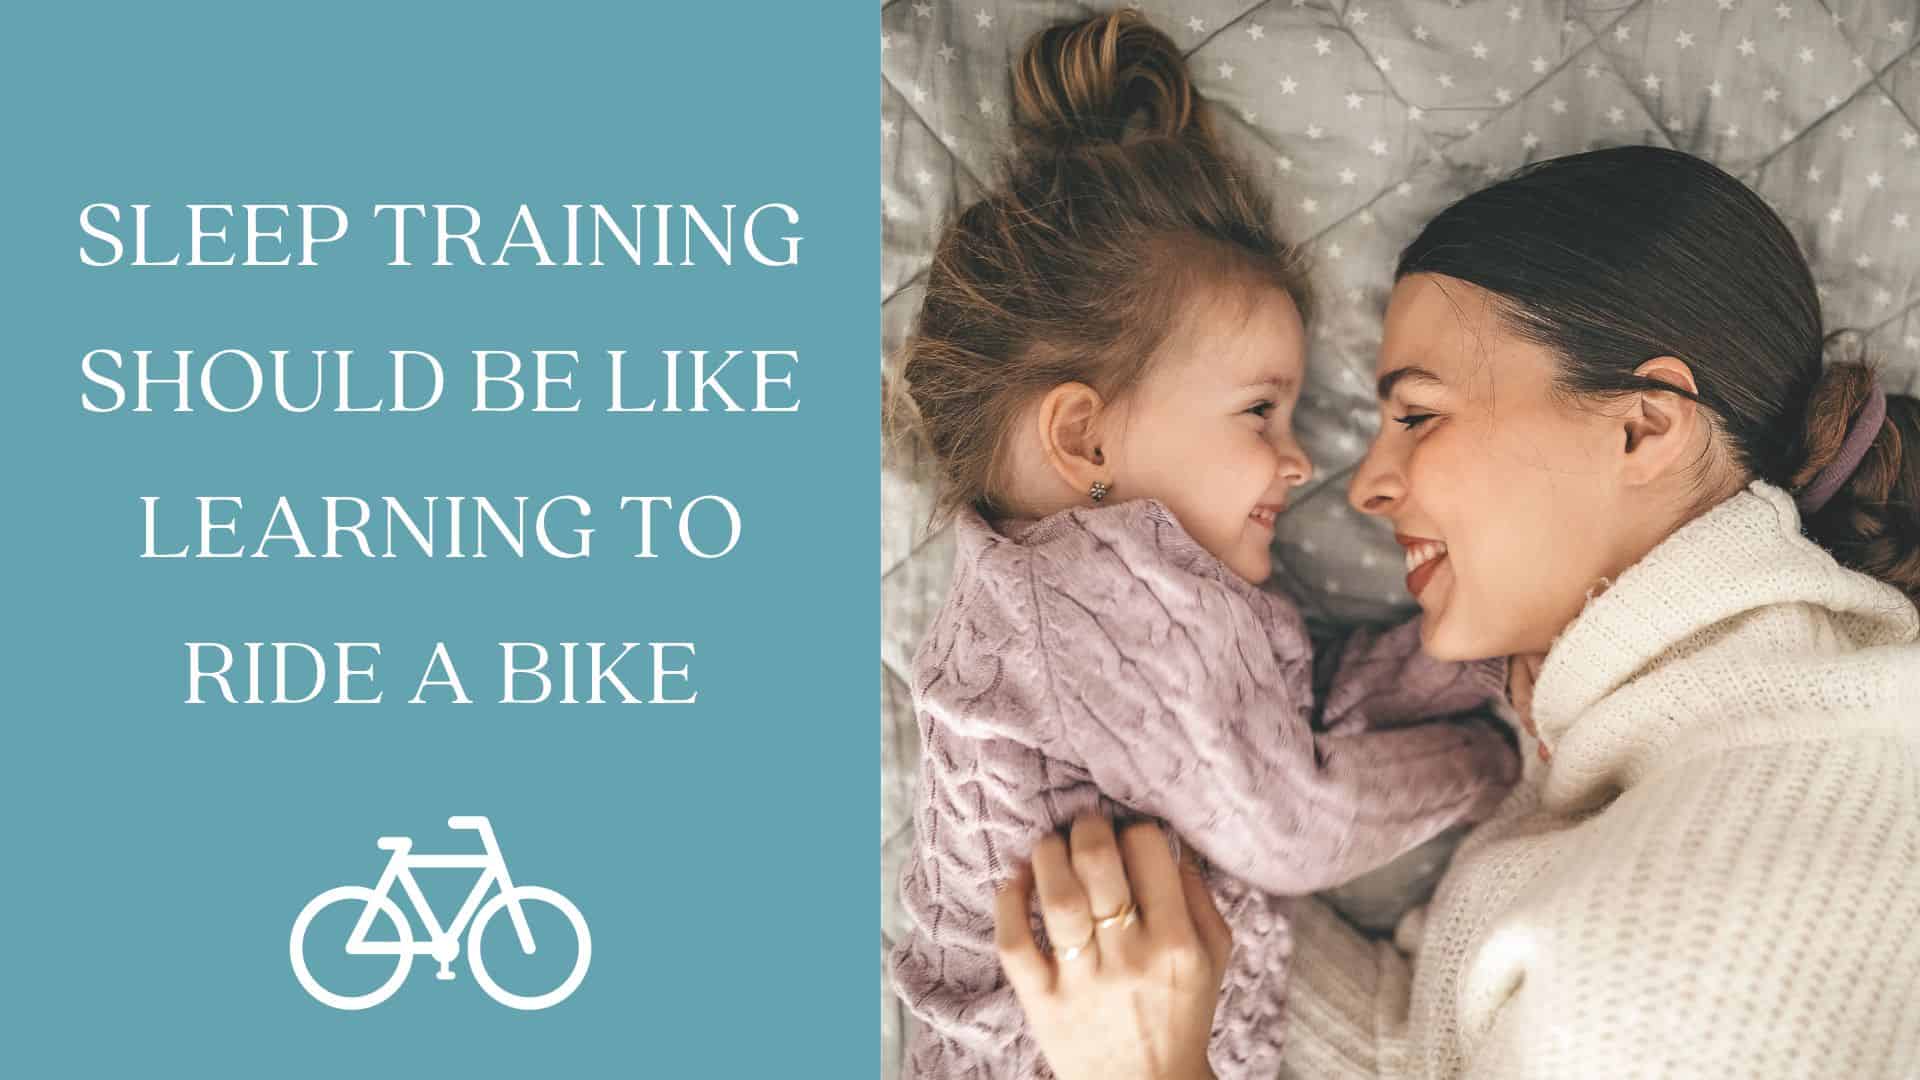 Sleep training Bike